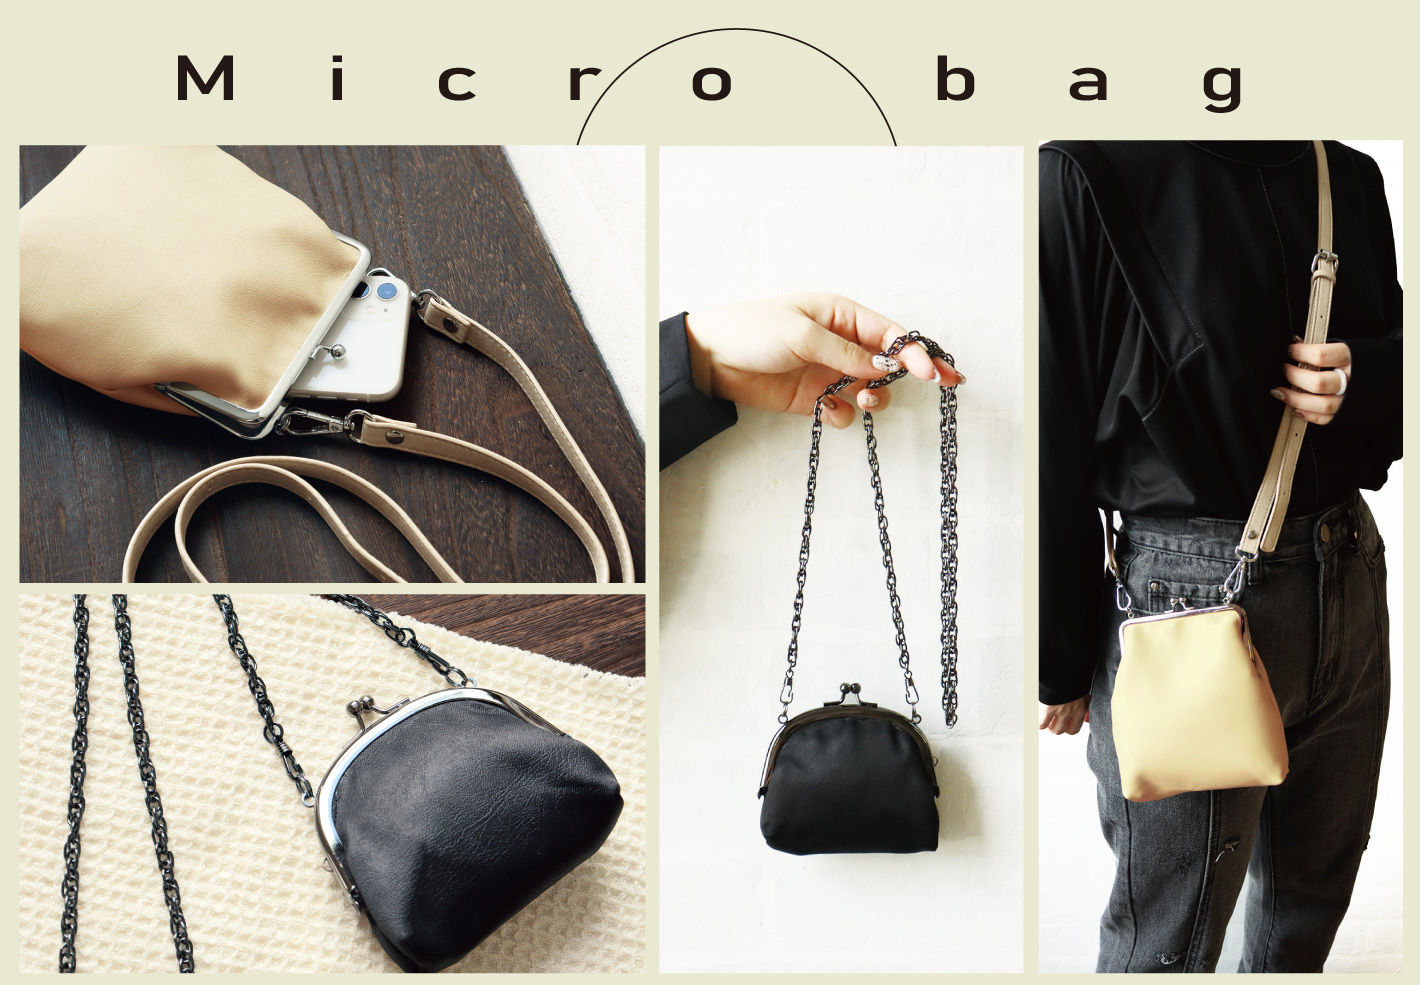 Micro bags like accessories